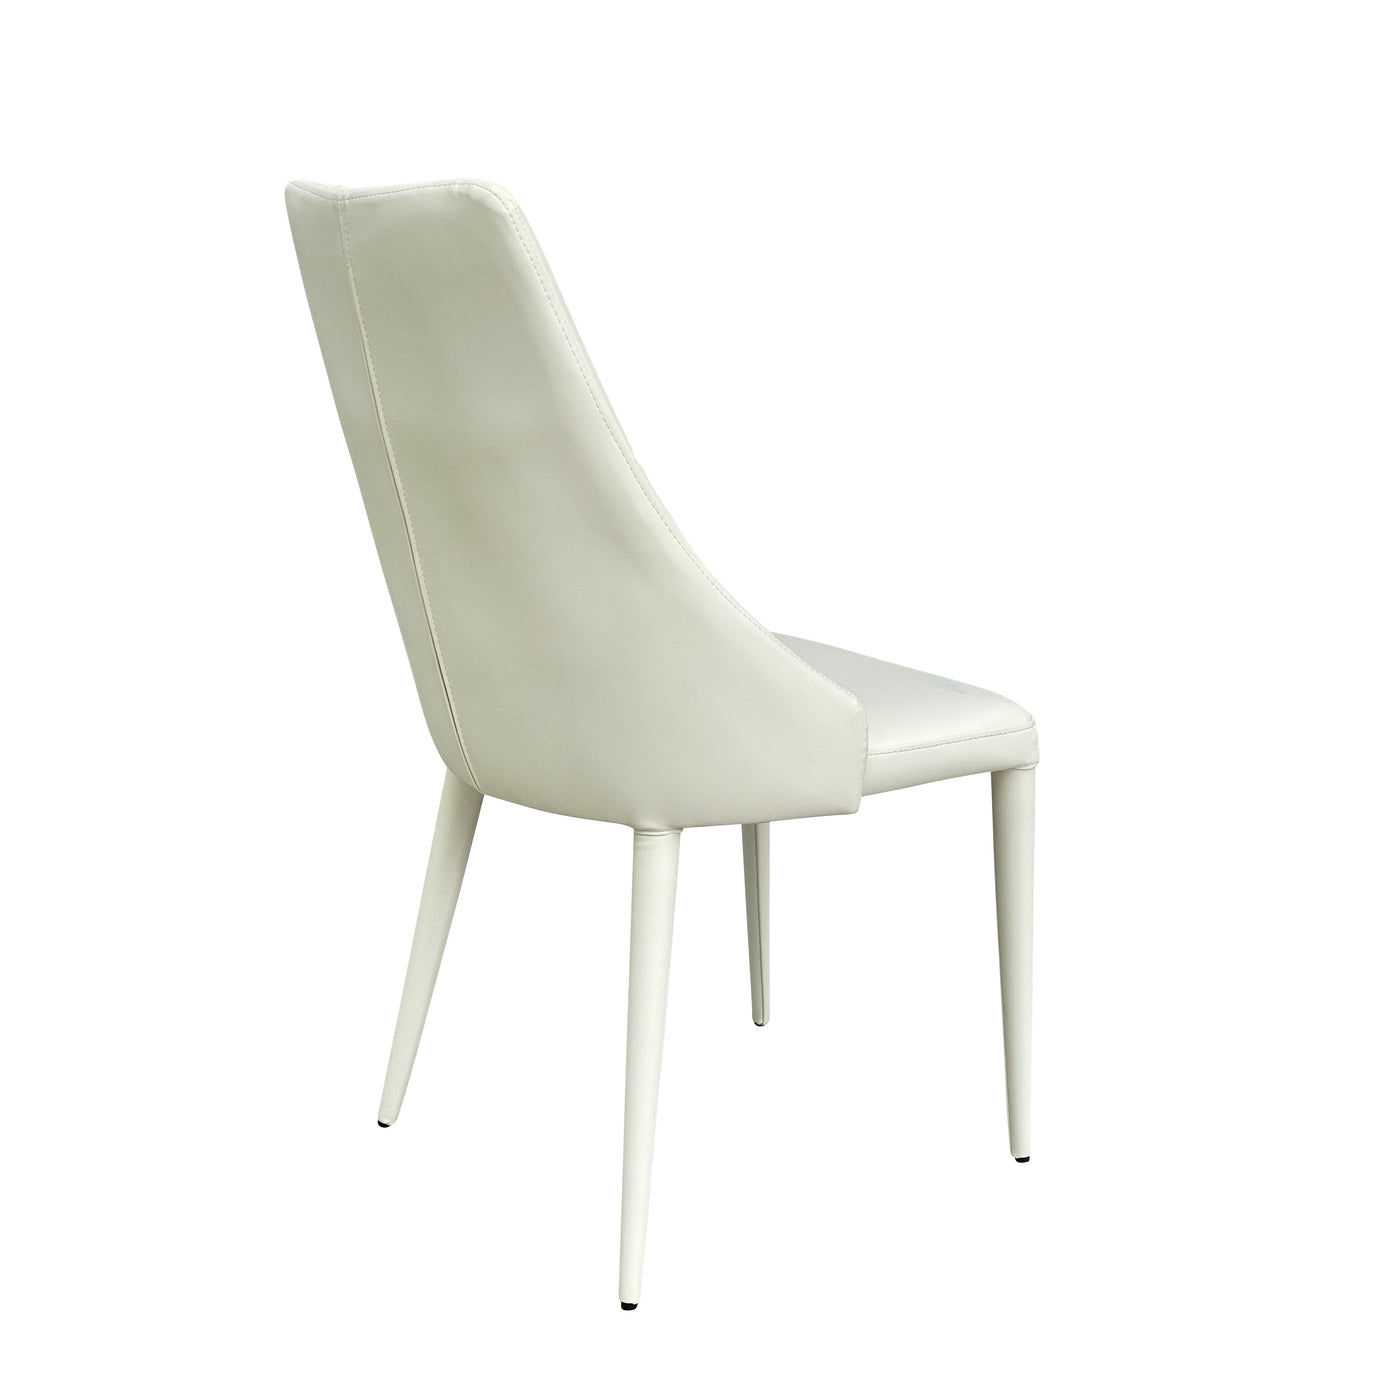 Bergamo Dining Chair Cream Leather Look